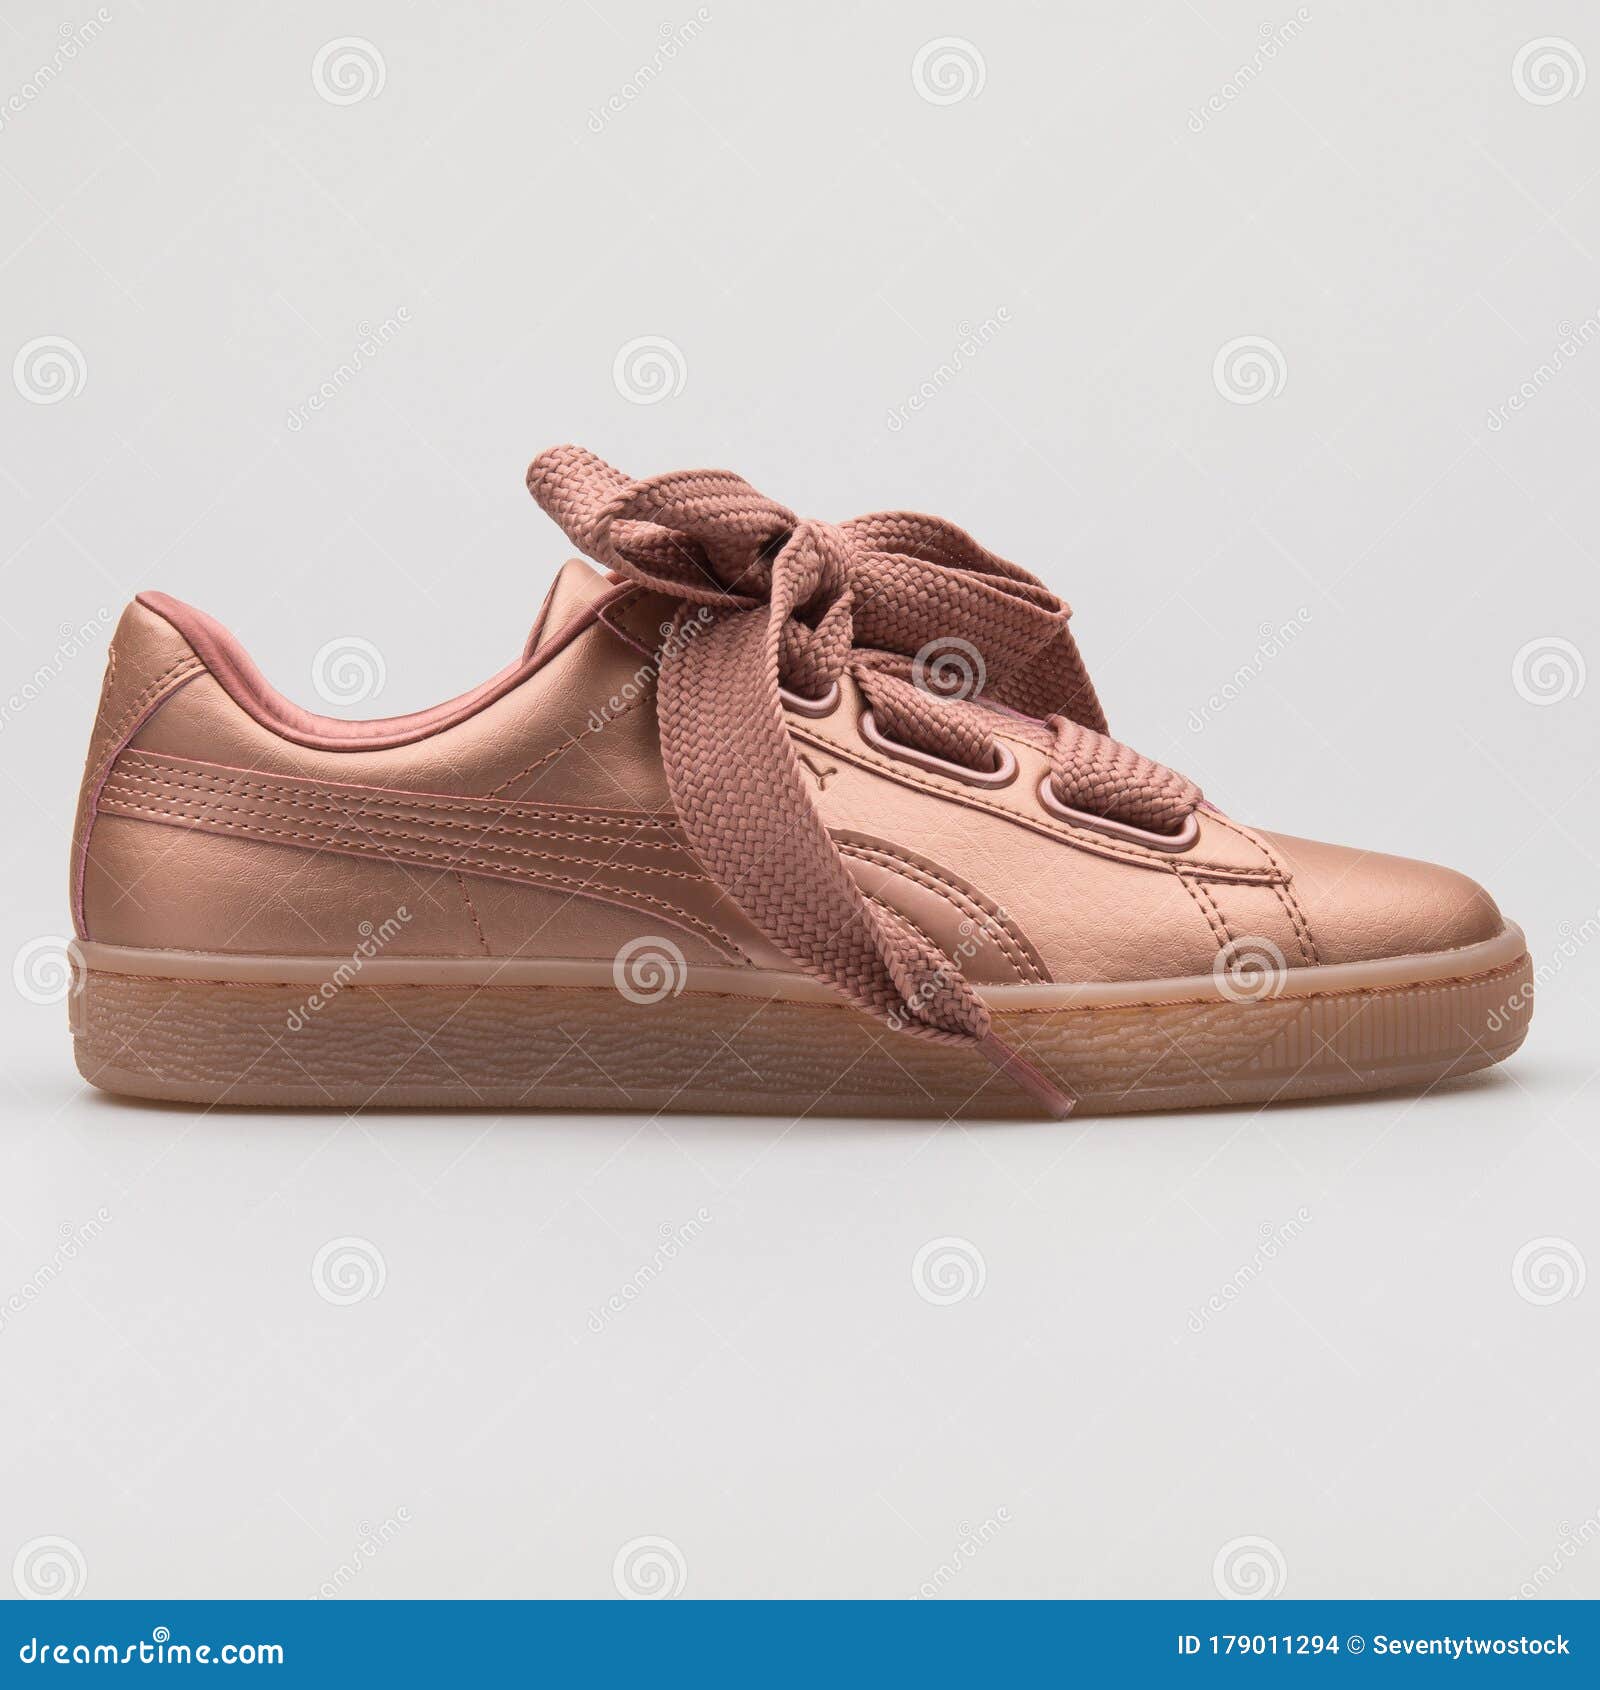 اطفال شرطه Puma Basket Heart Copper Rose Sneaker Editorial Stock Image ... اطفال شرطه